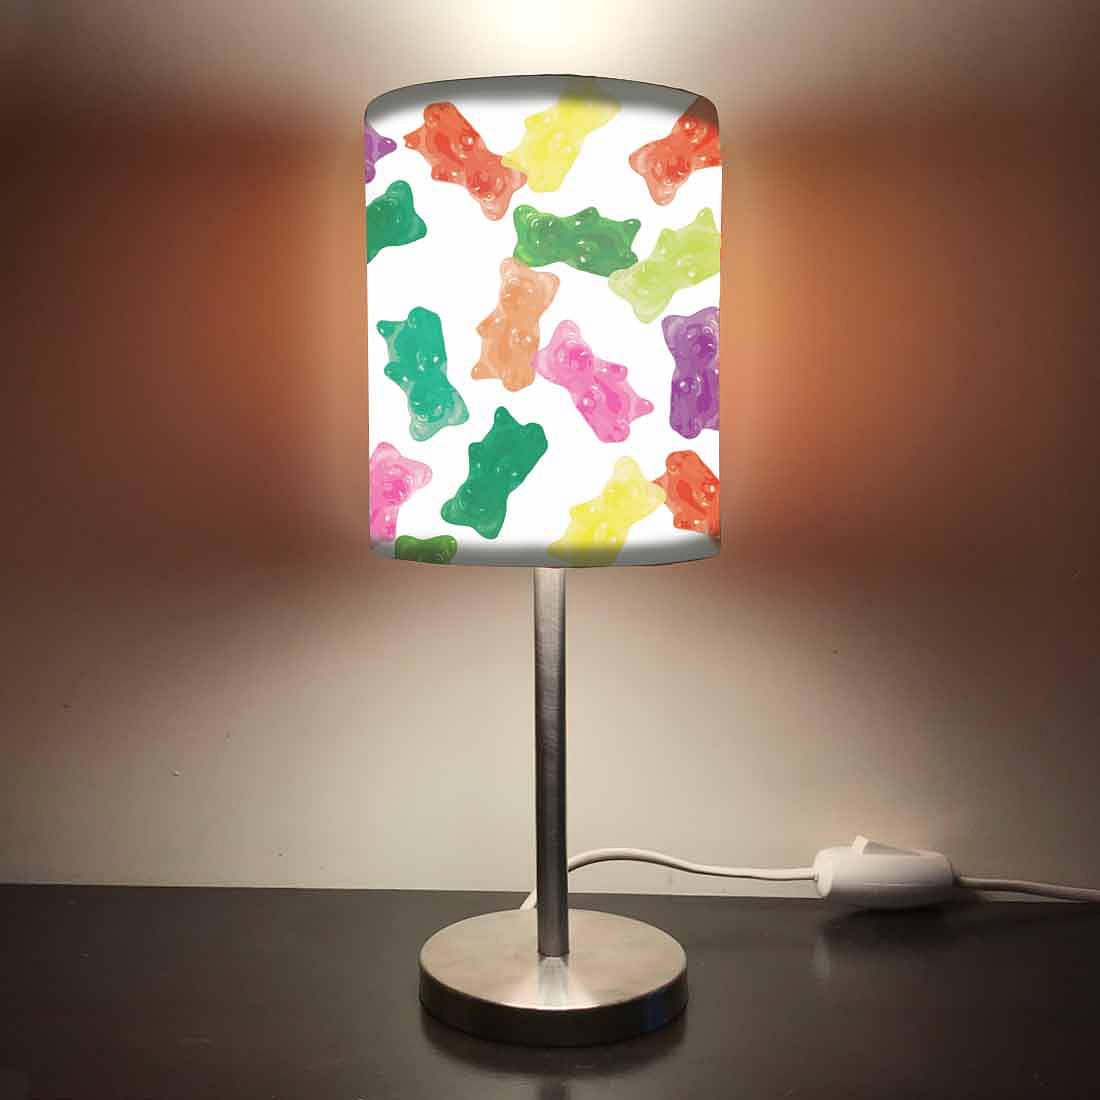 Childrens Ceiling Lights Lamps for Bedroom - Gummy Bears 0009 Nutcase